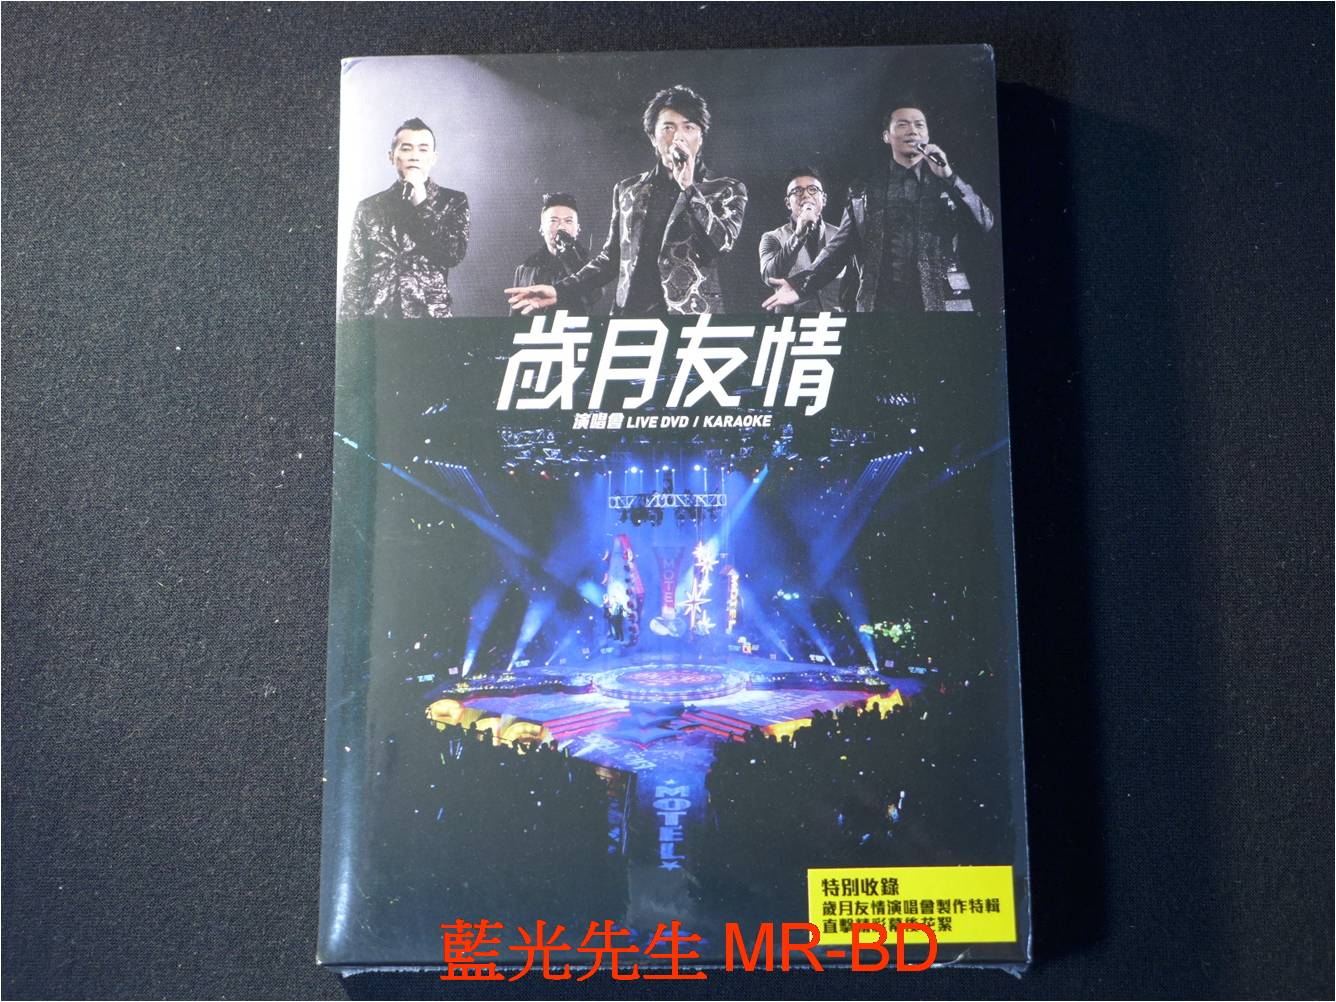 DVD] - 古惑仔: 歲月友情演唱會Young And Dangerous Concert Live 三碟版- 鄭伊健、陳小春- PChome 商店街